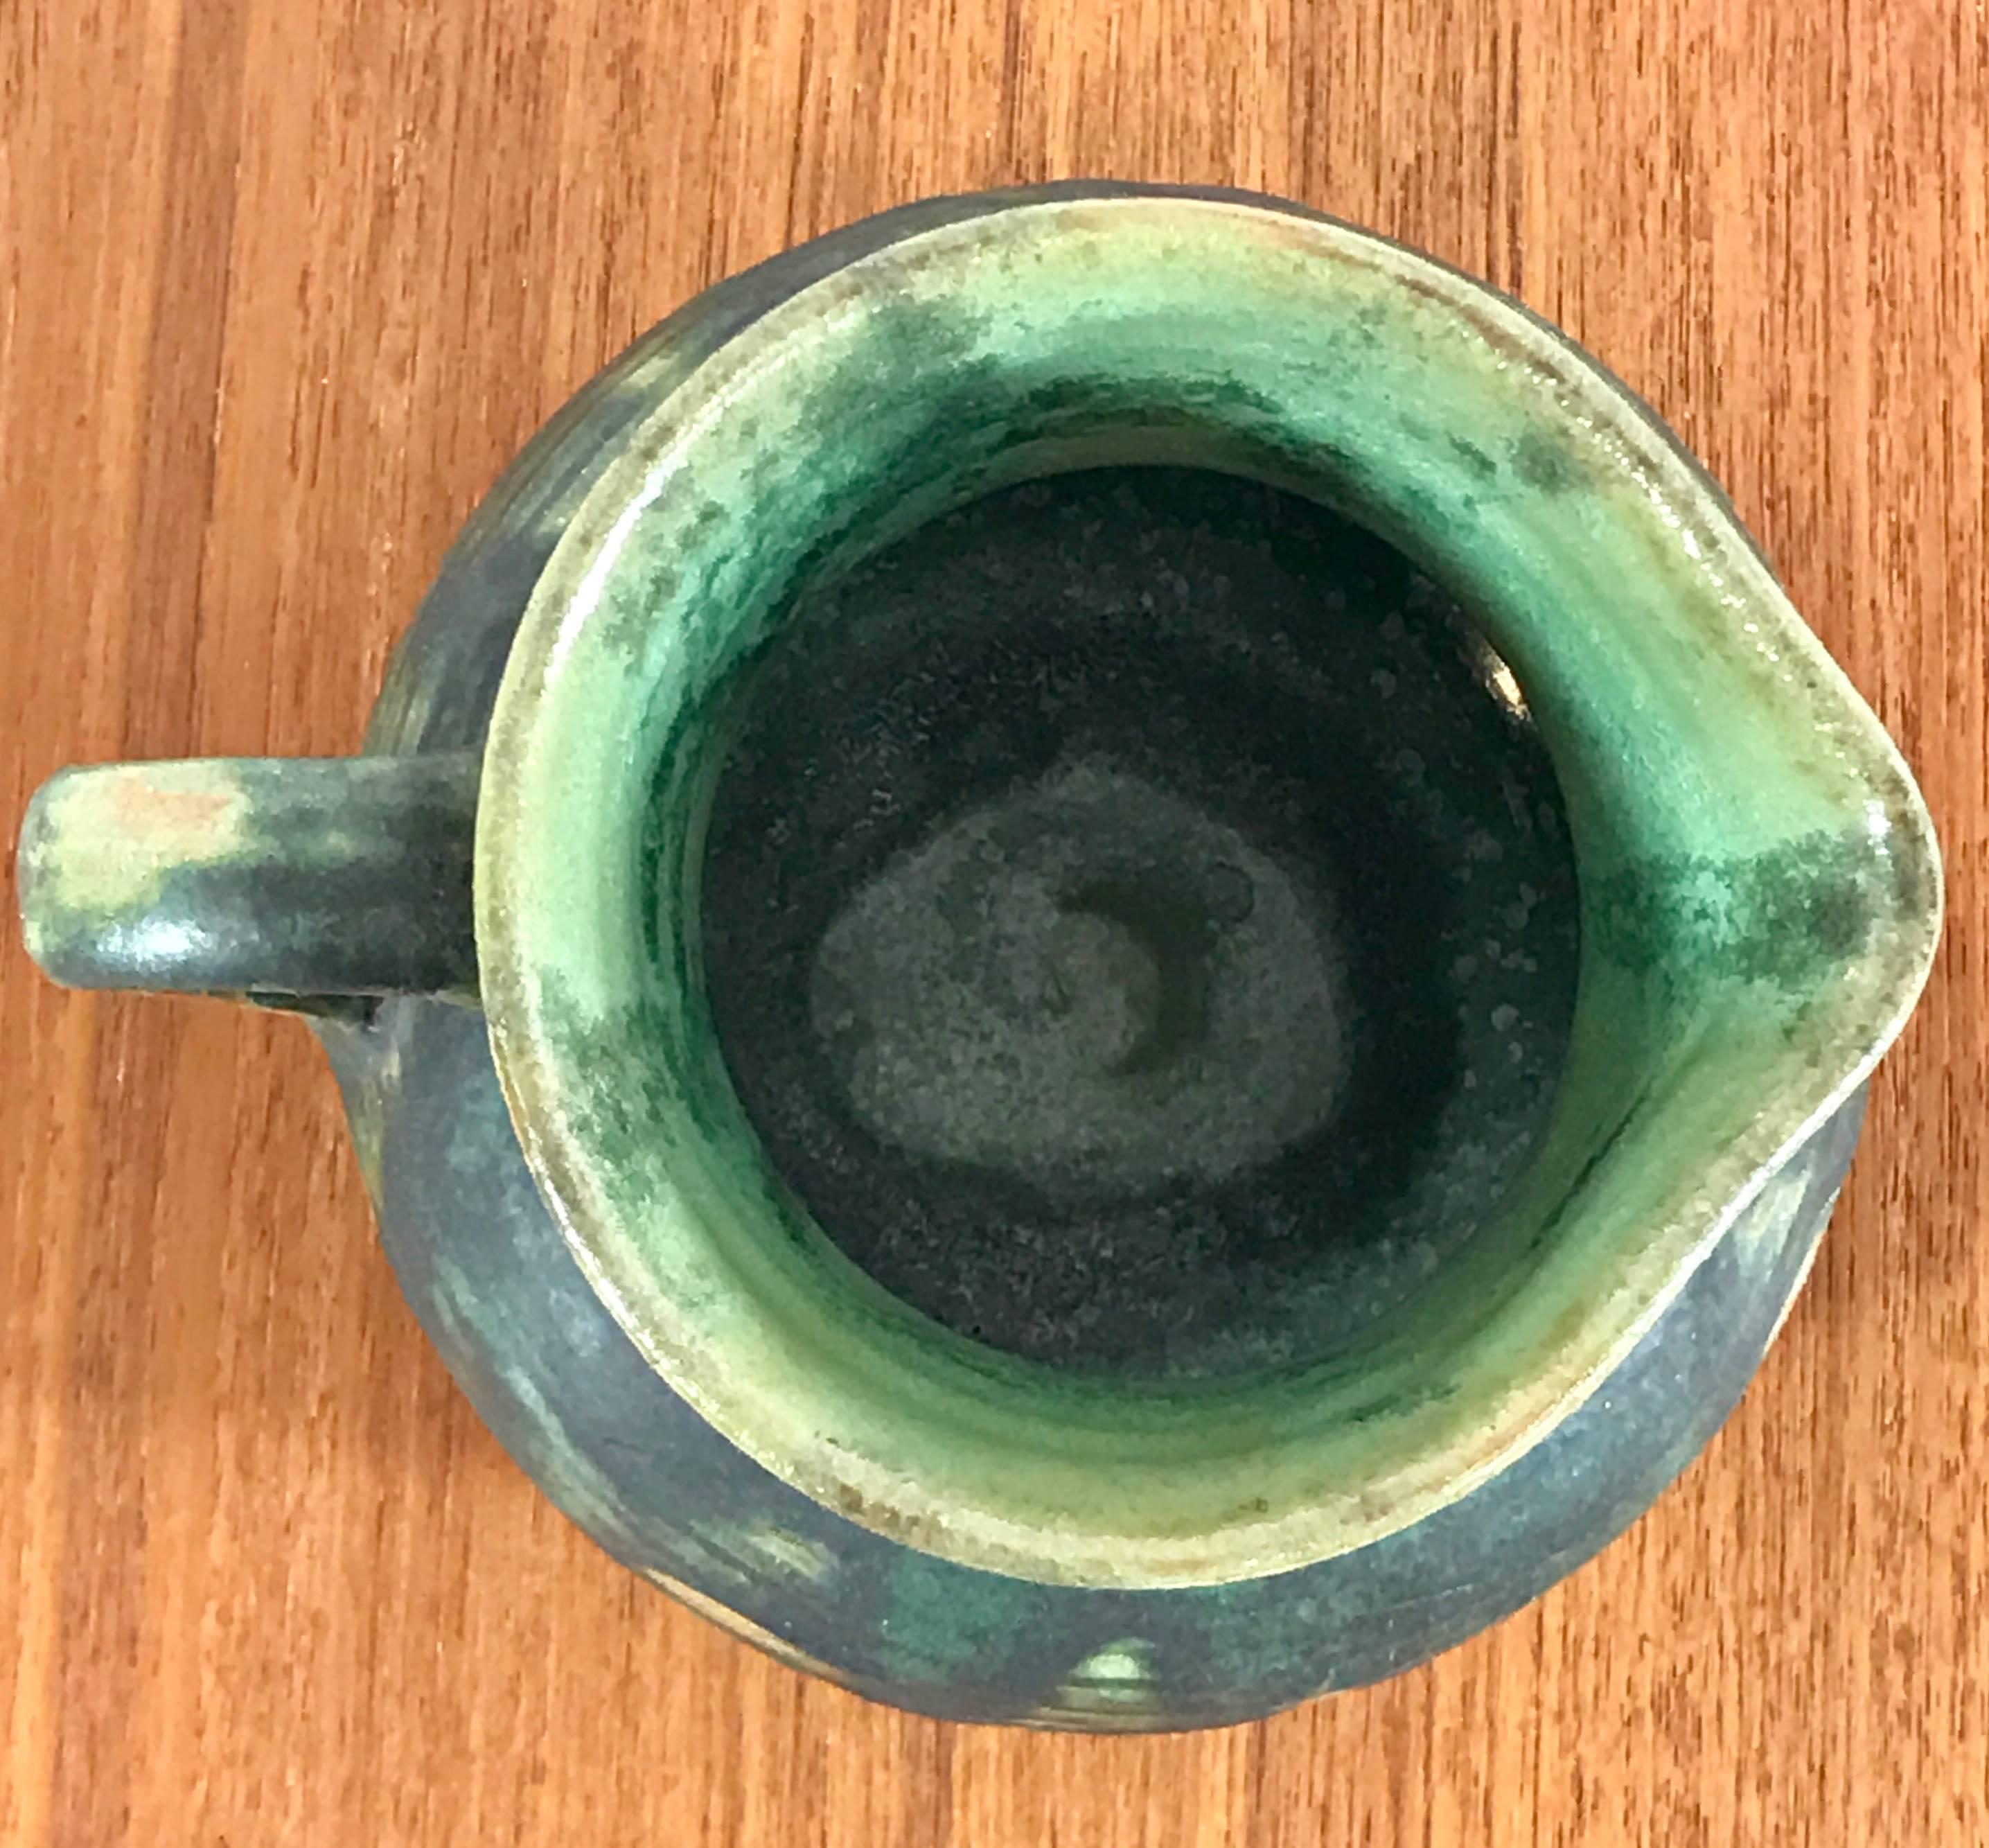 Beautiful vibrant green drip glaze ceramic pitcher. Glaze has a cool metallic shine.